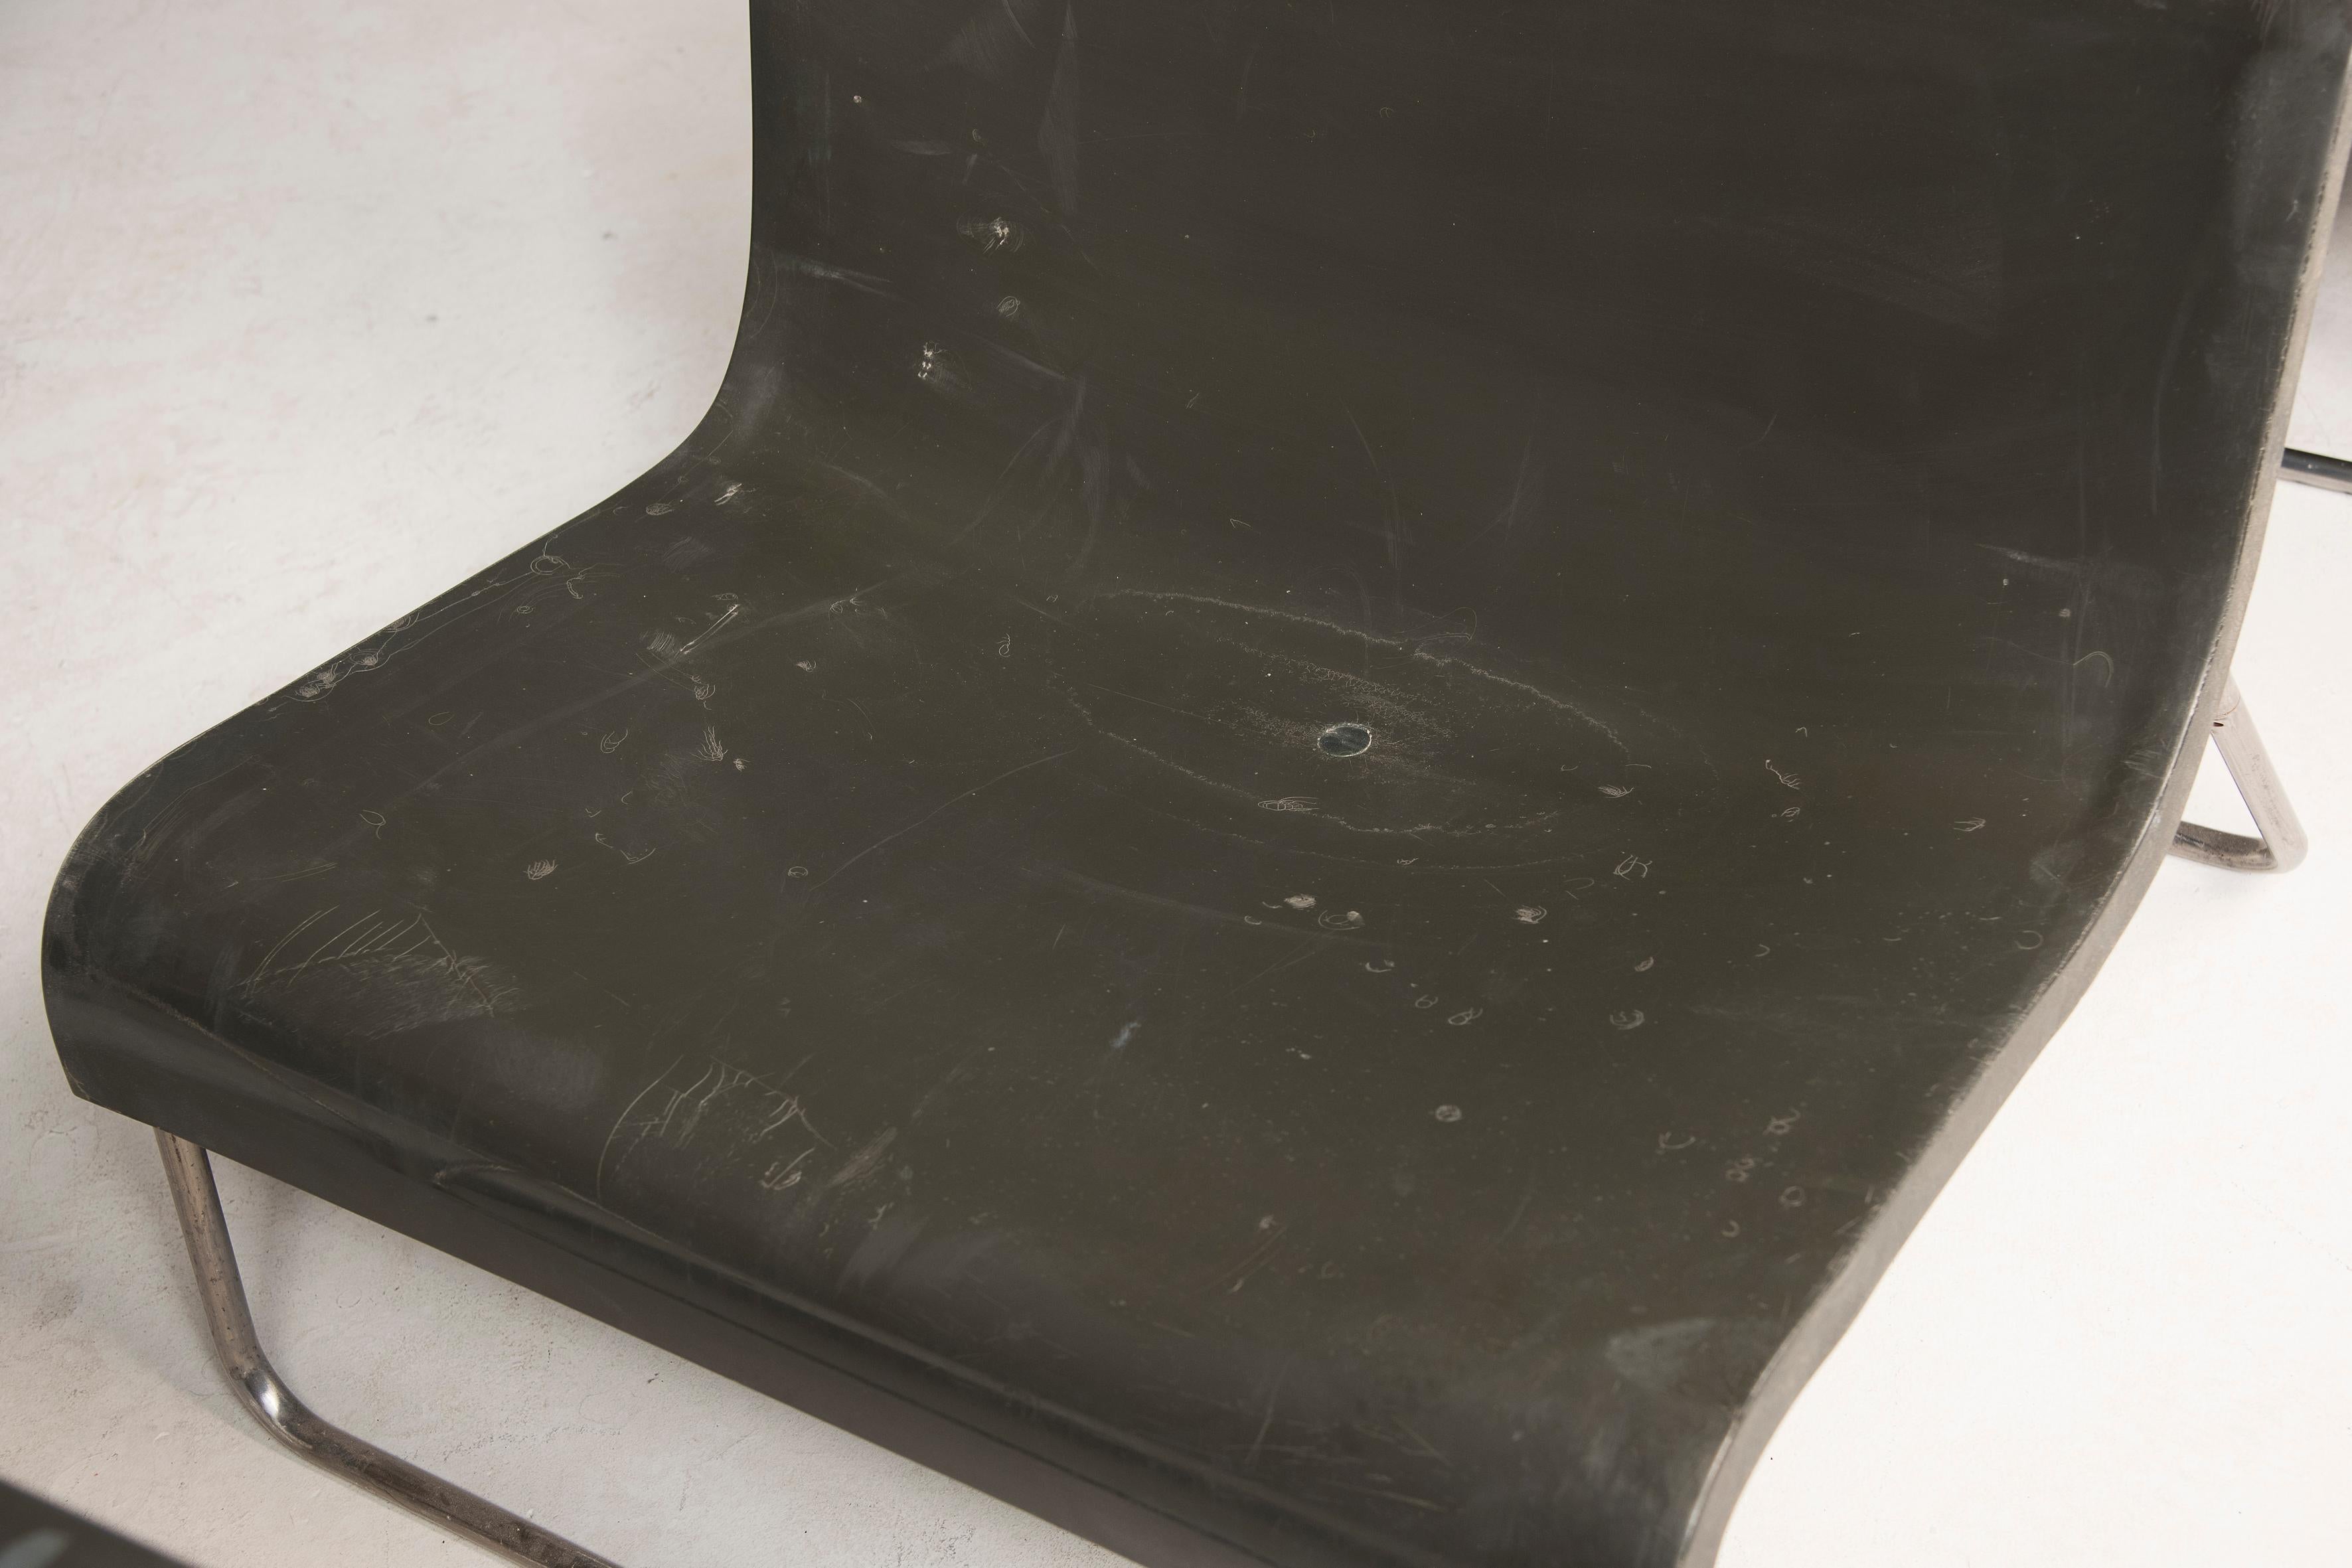 Black Kartell Form Design by Piero Lissoni Steel legs Outdoor Indoor Chairs 1